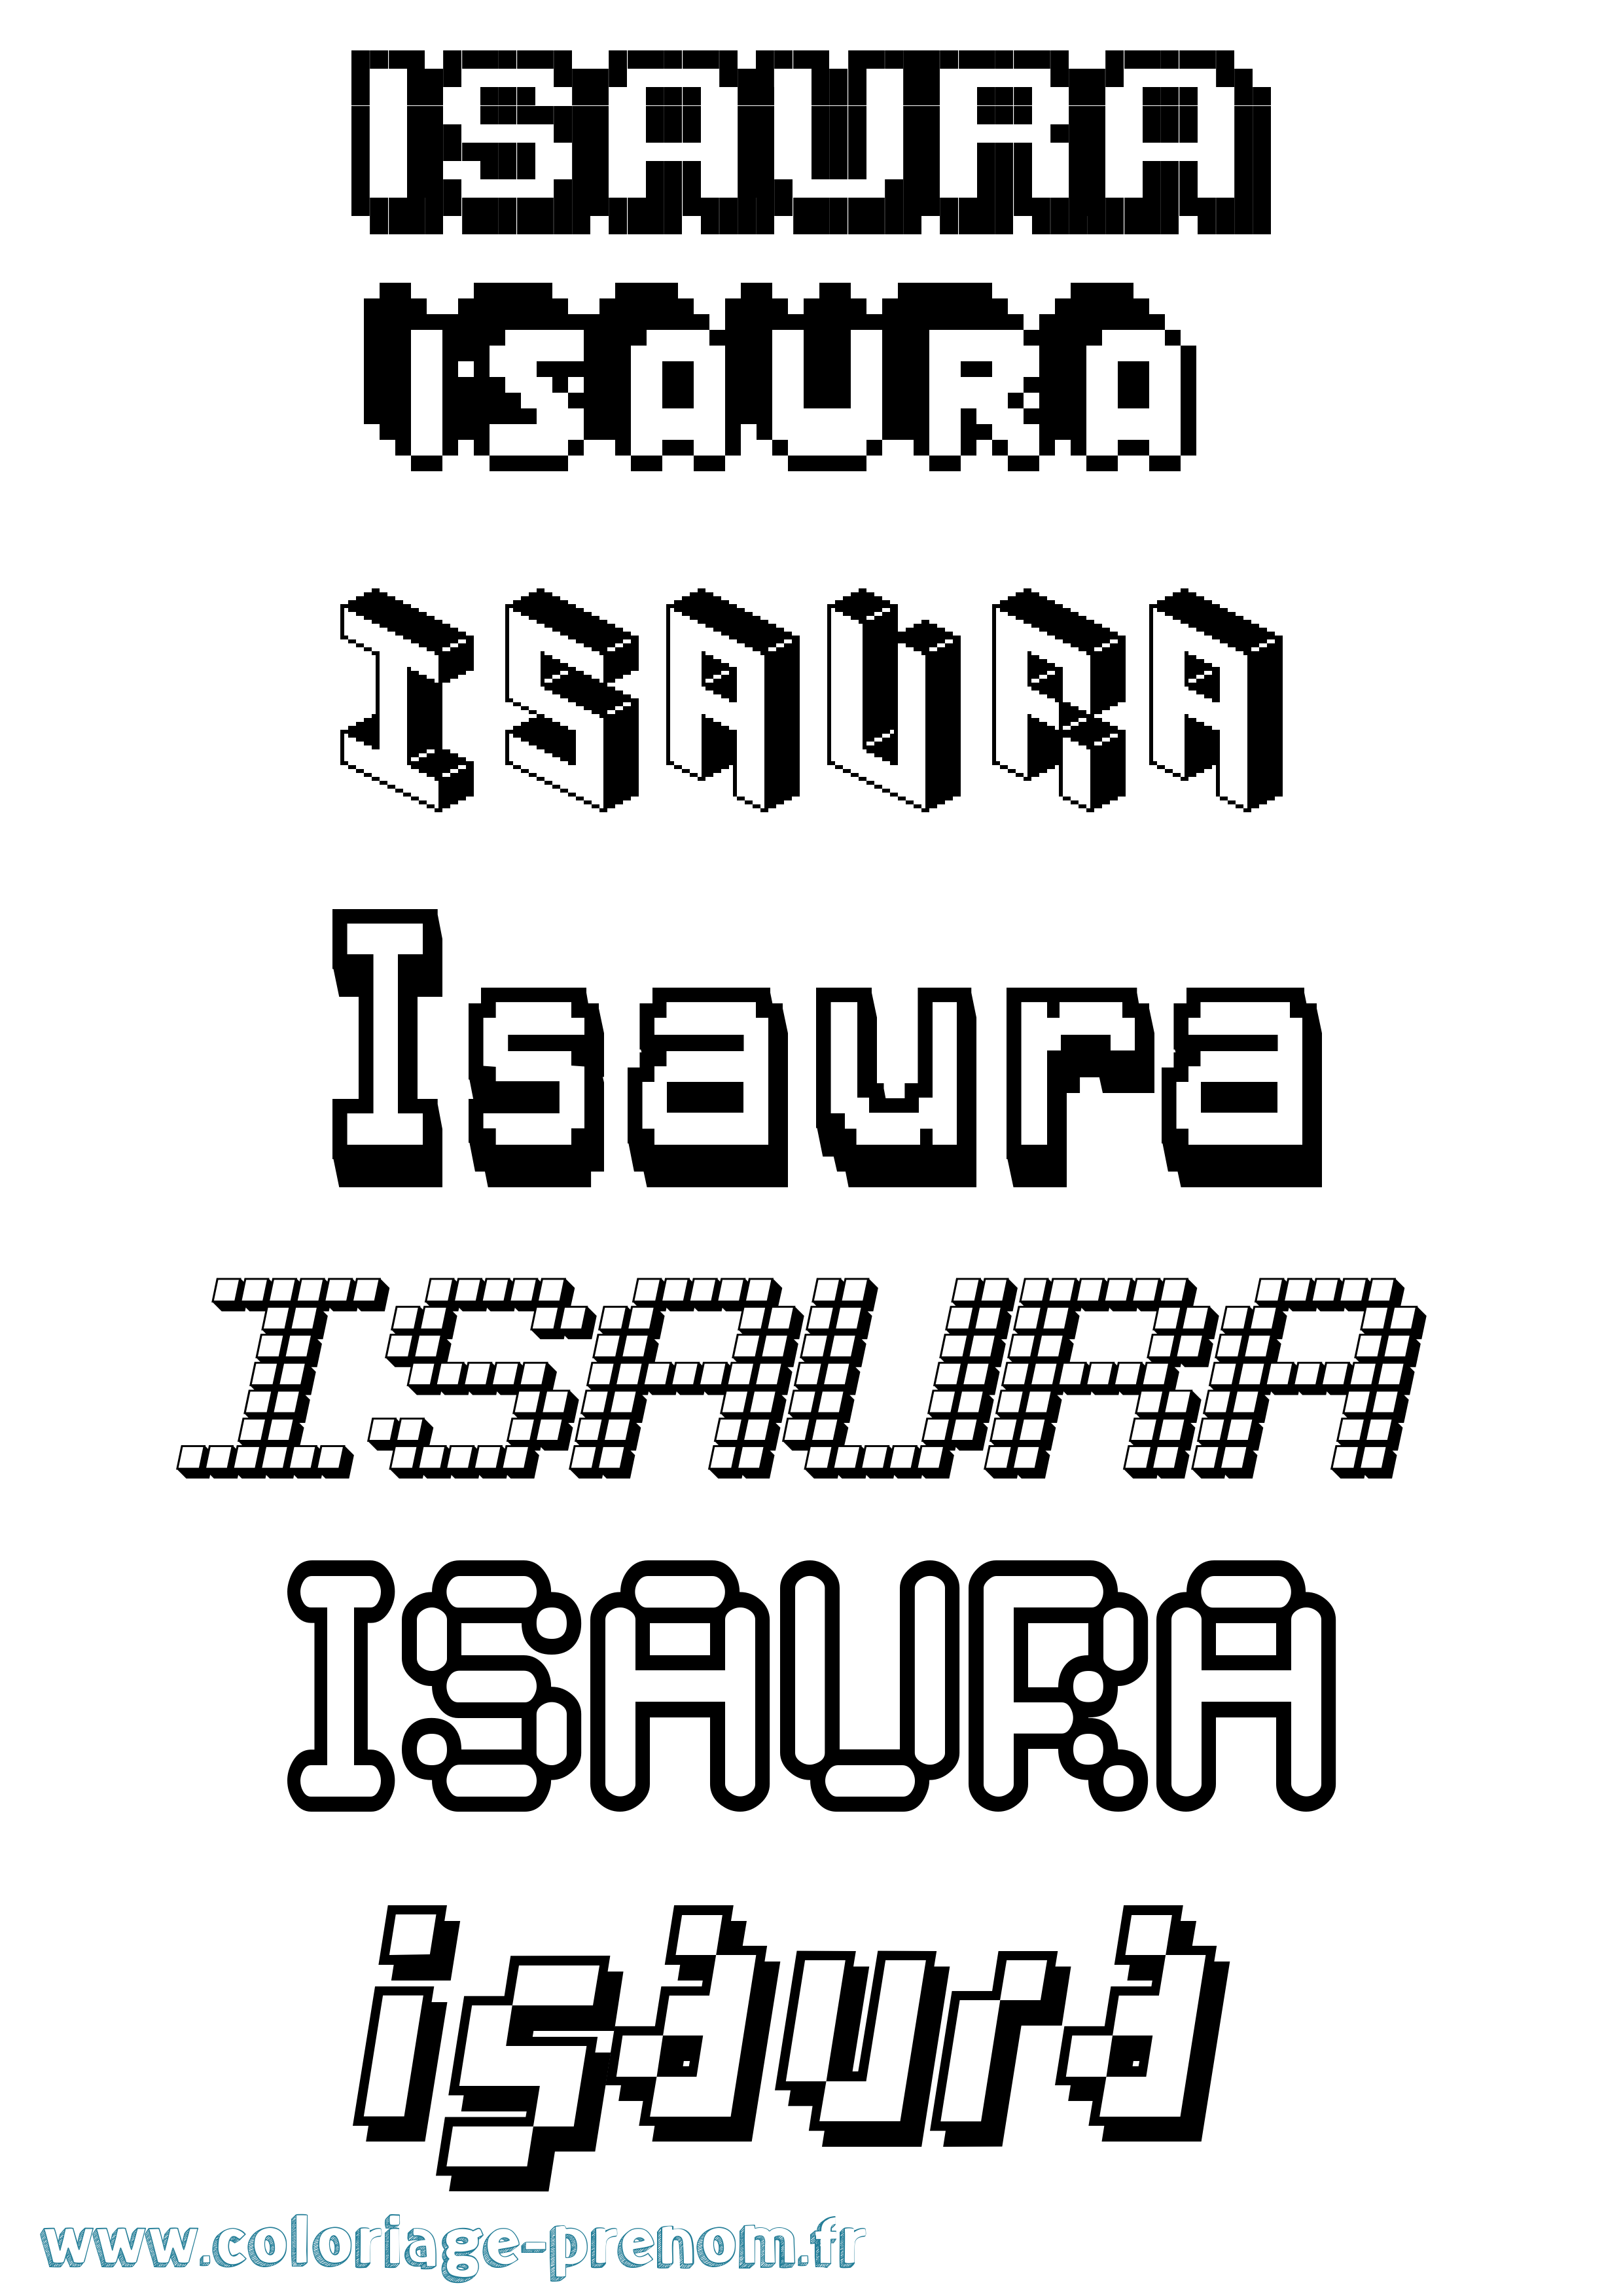 Coloriage prénom Isaura Pixel